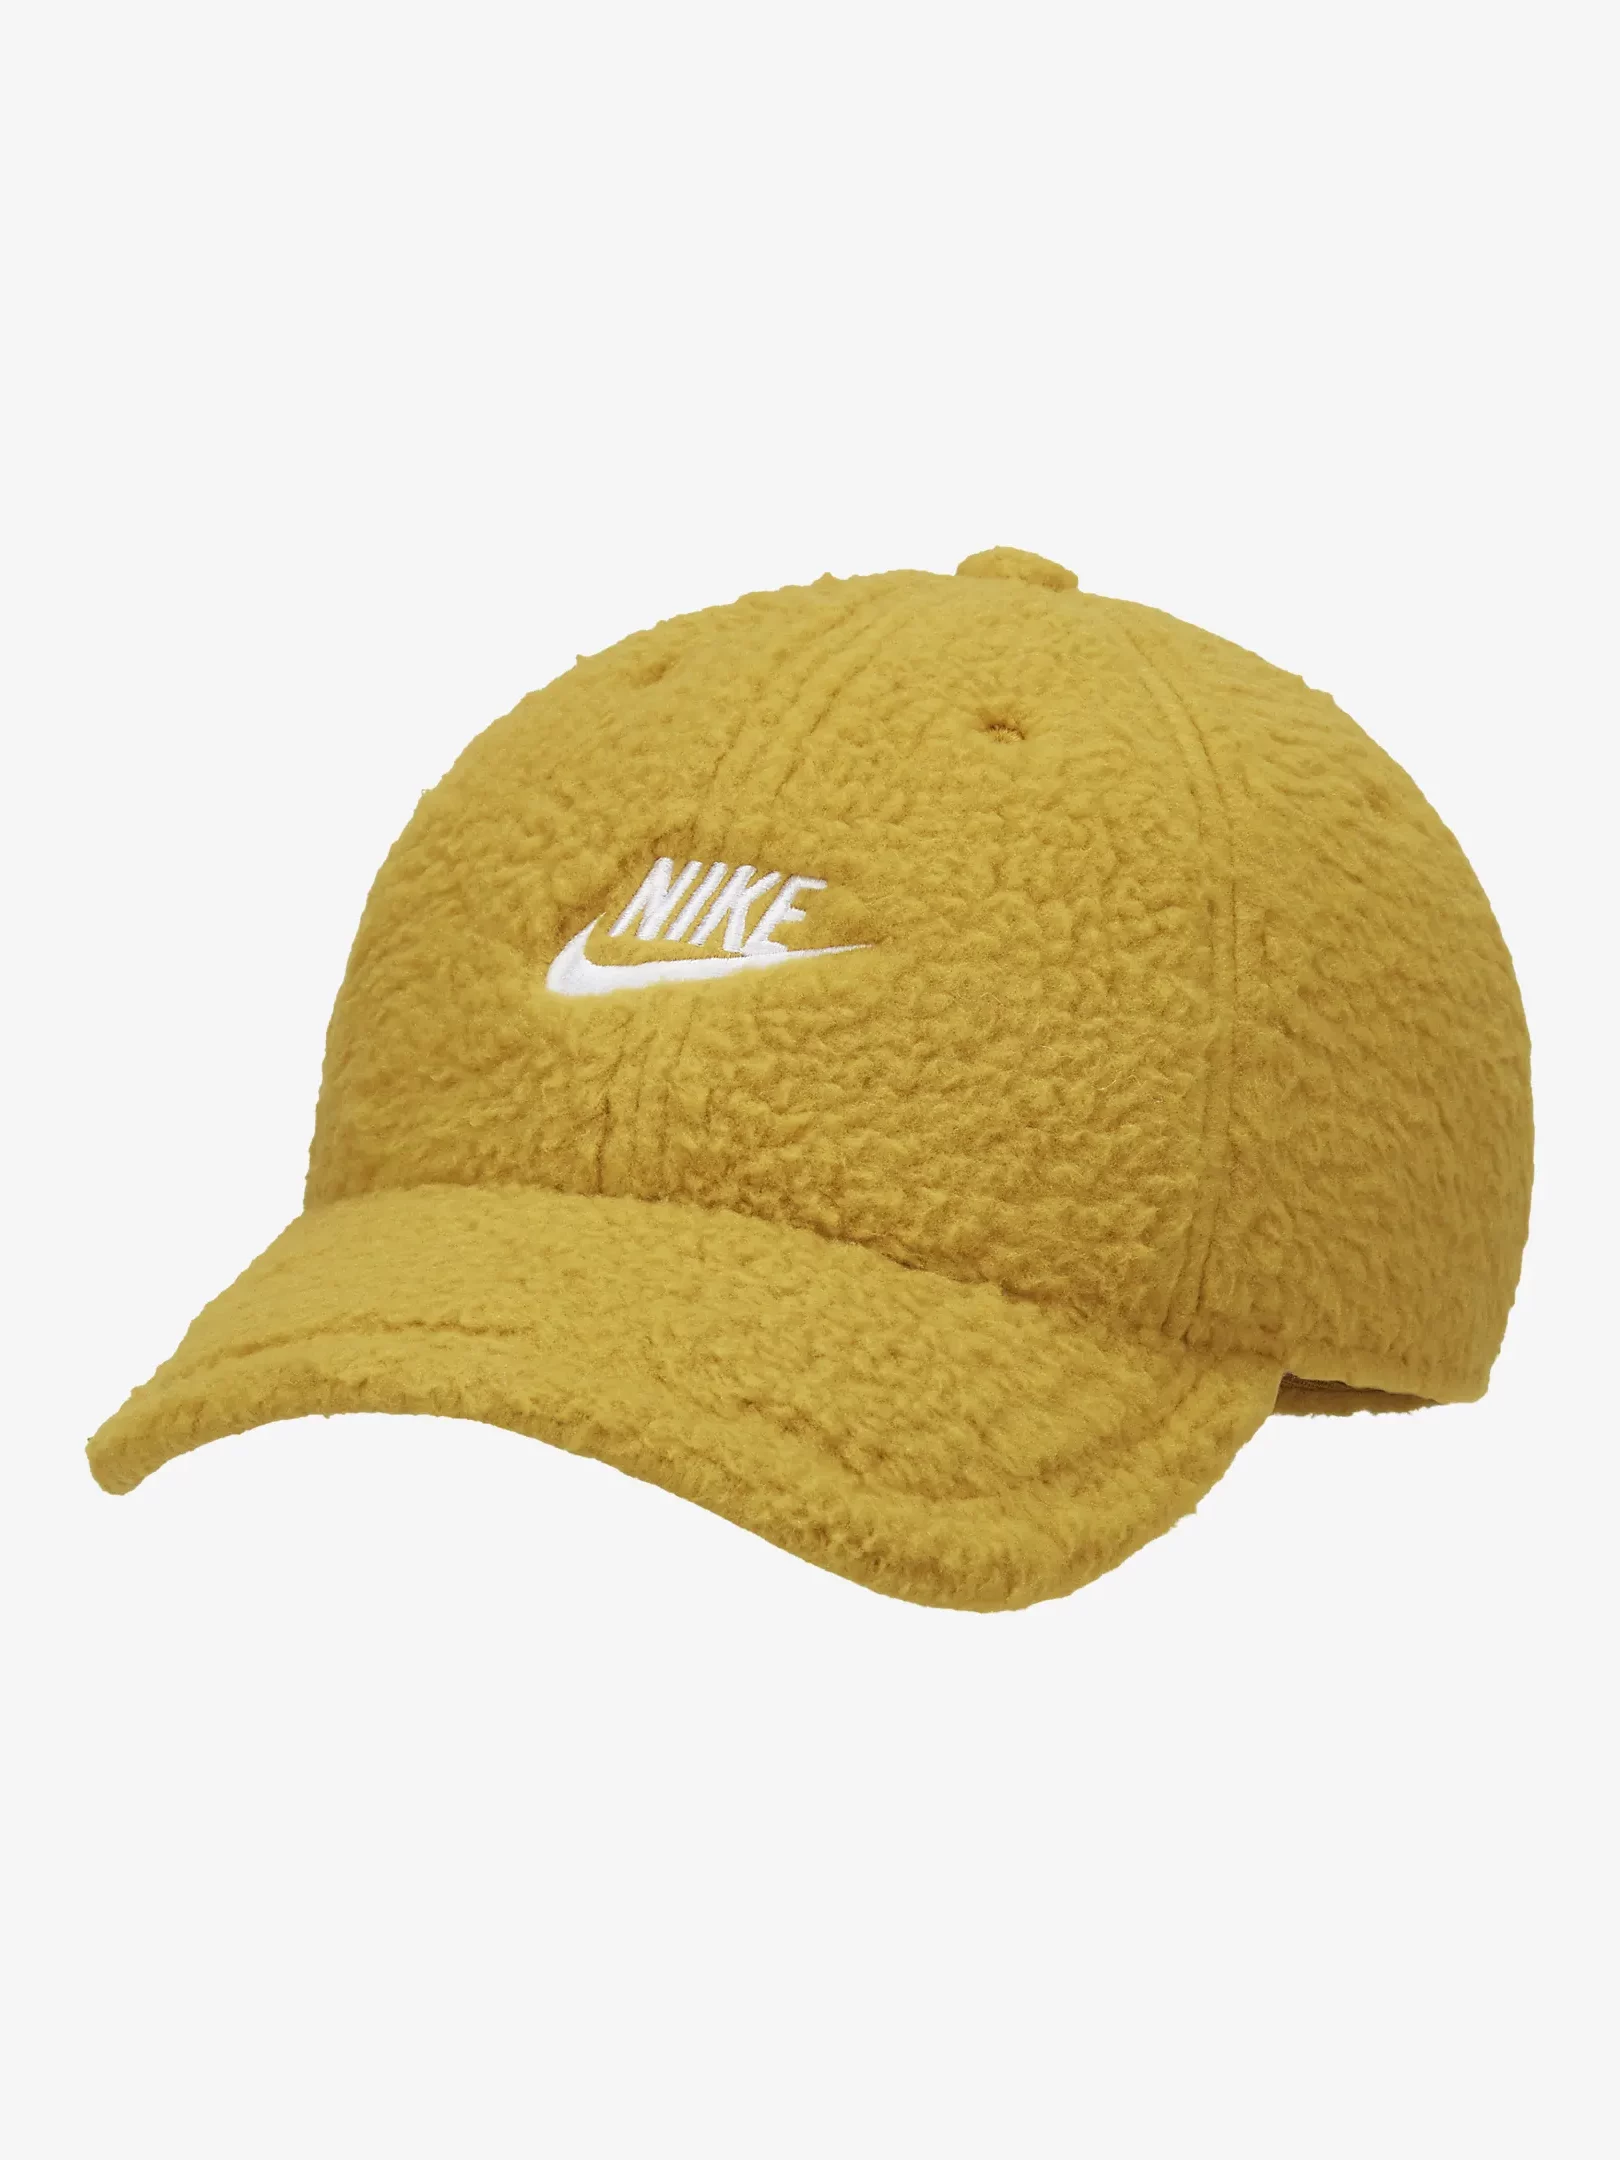 nike fluffy yellow cap